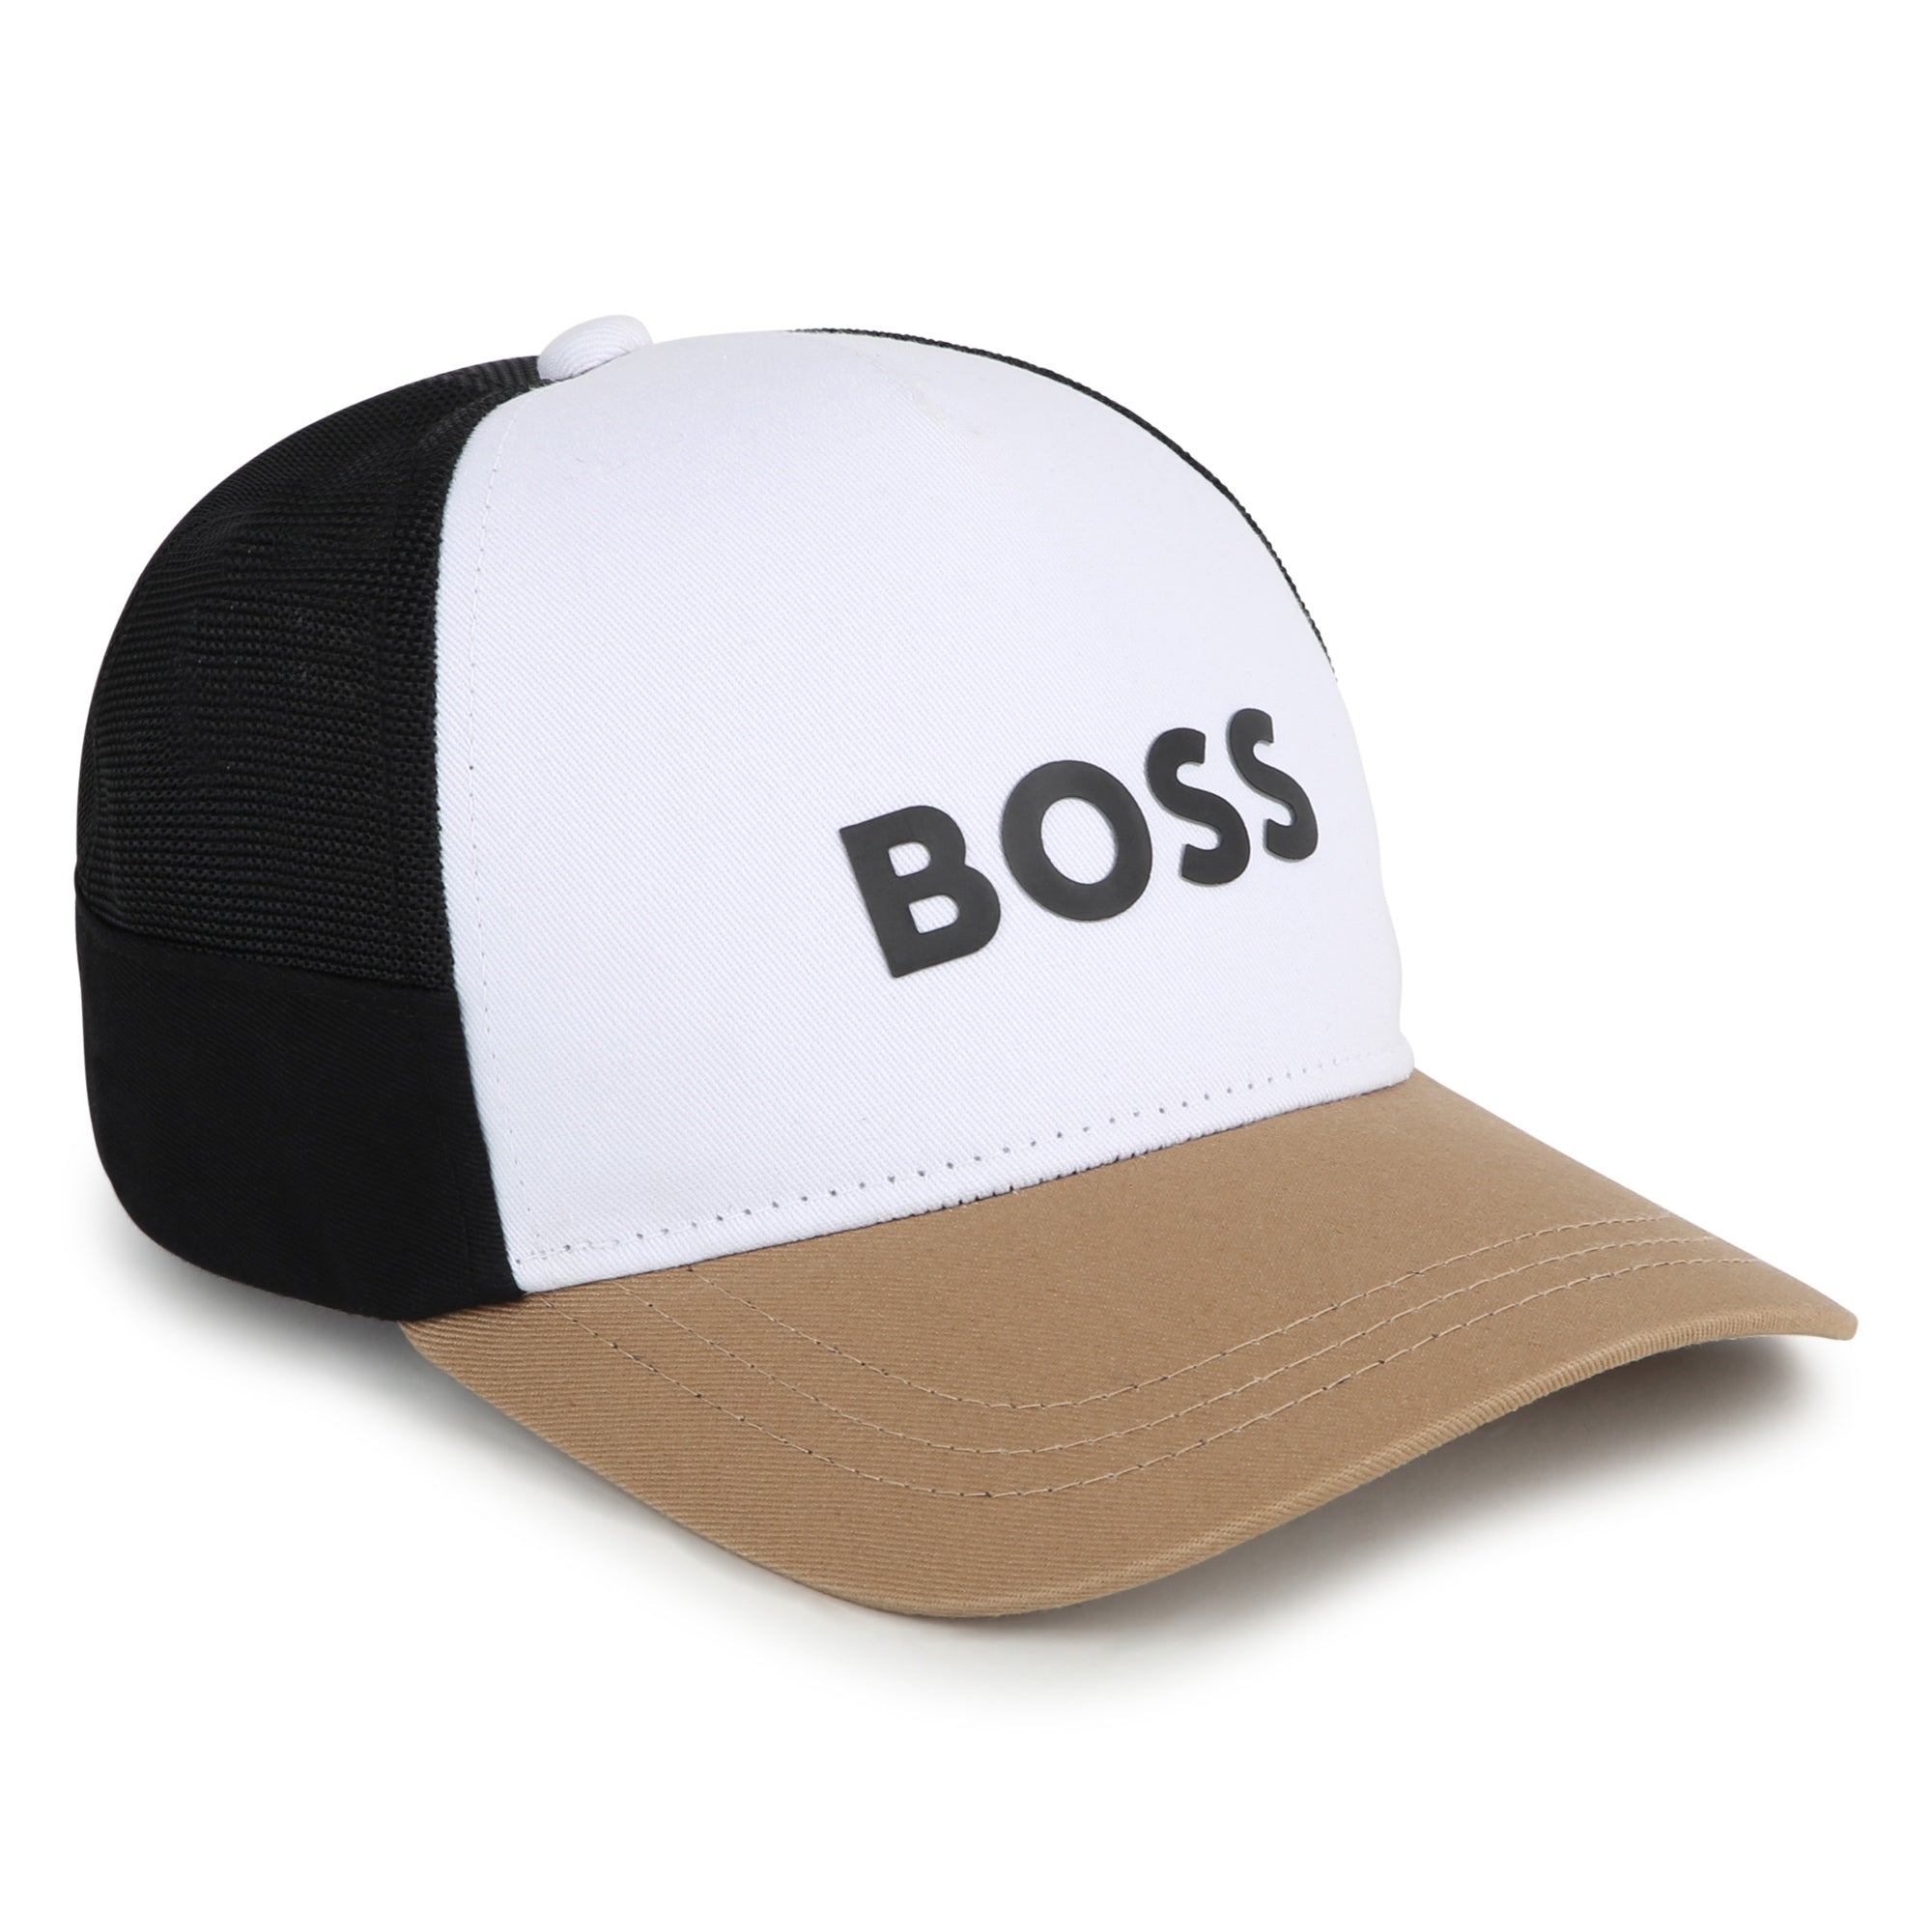 Hugo Boss Black & Brown Hat